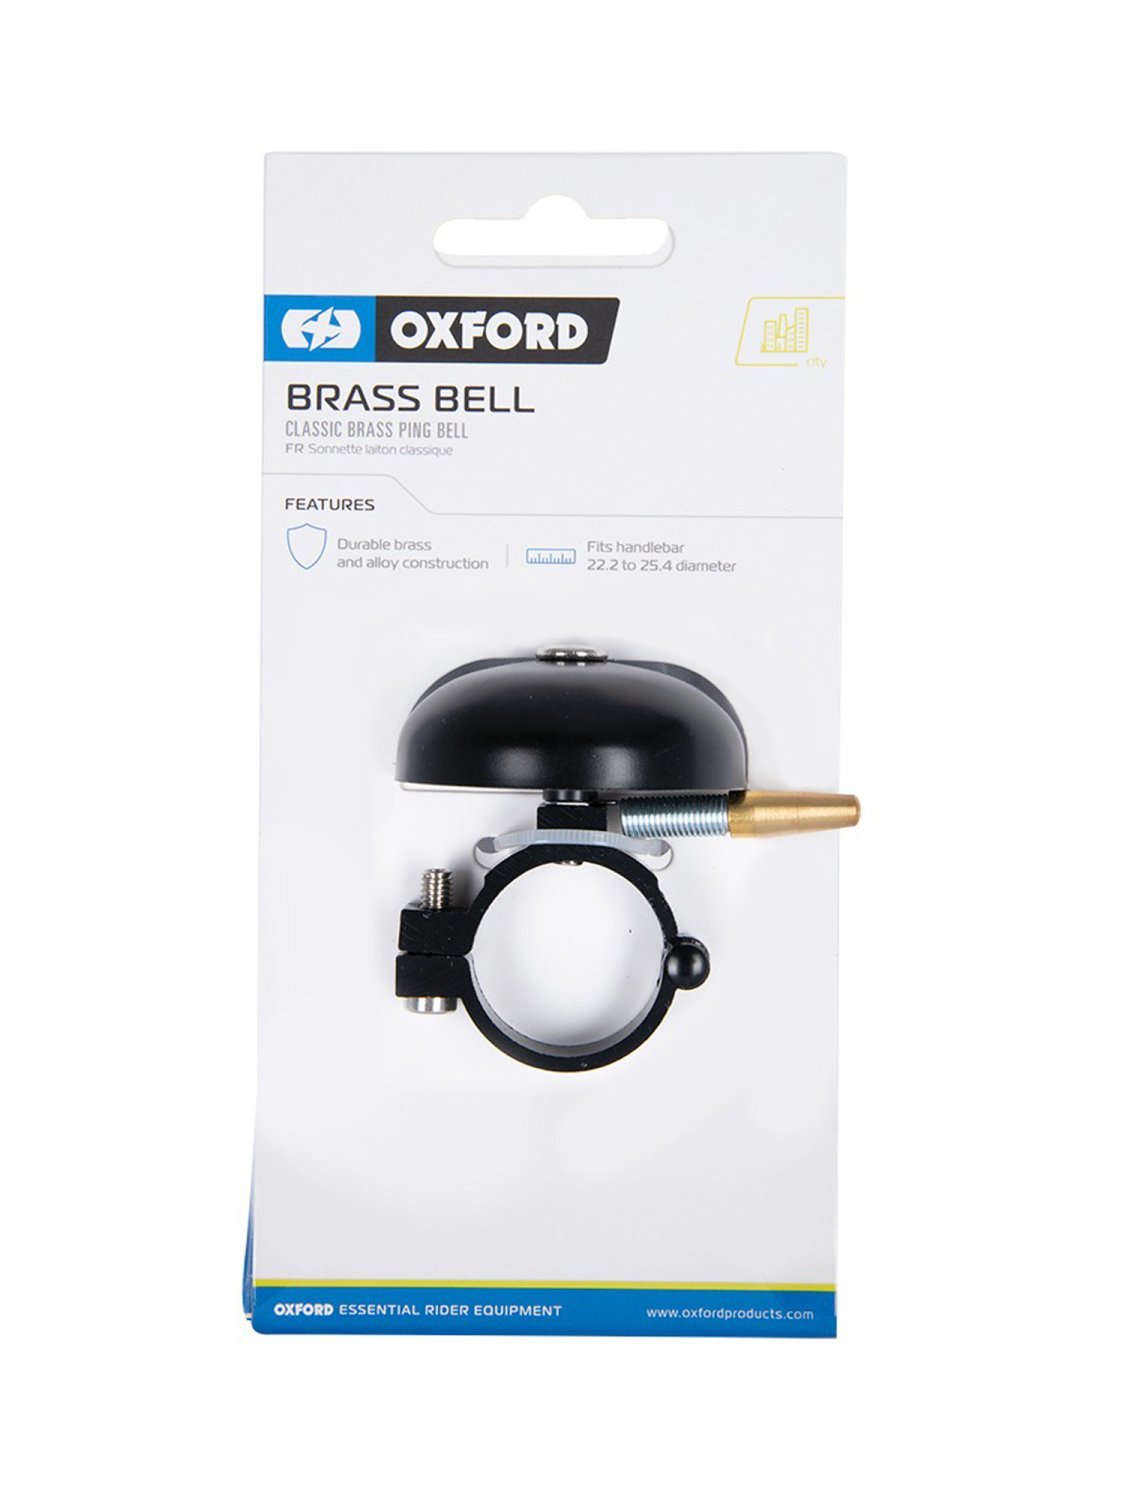 Звонок велосипедный Oxford Classic Brass Ping Bell Black б/р, BE159B купить на ЖДБЗ.ру - фотография № 3